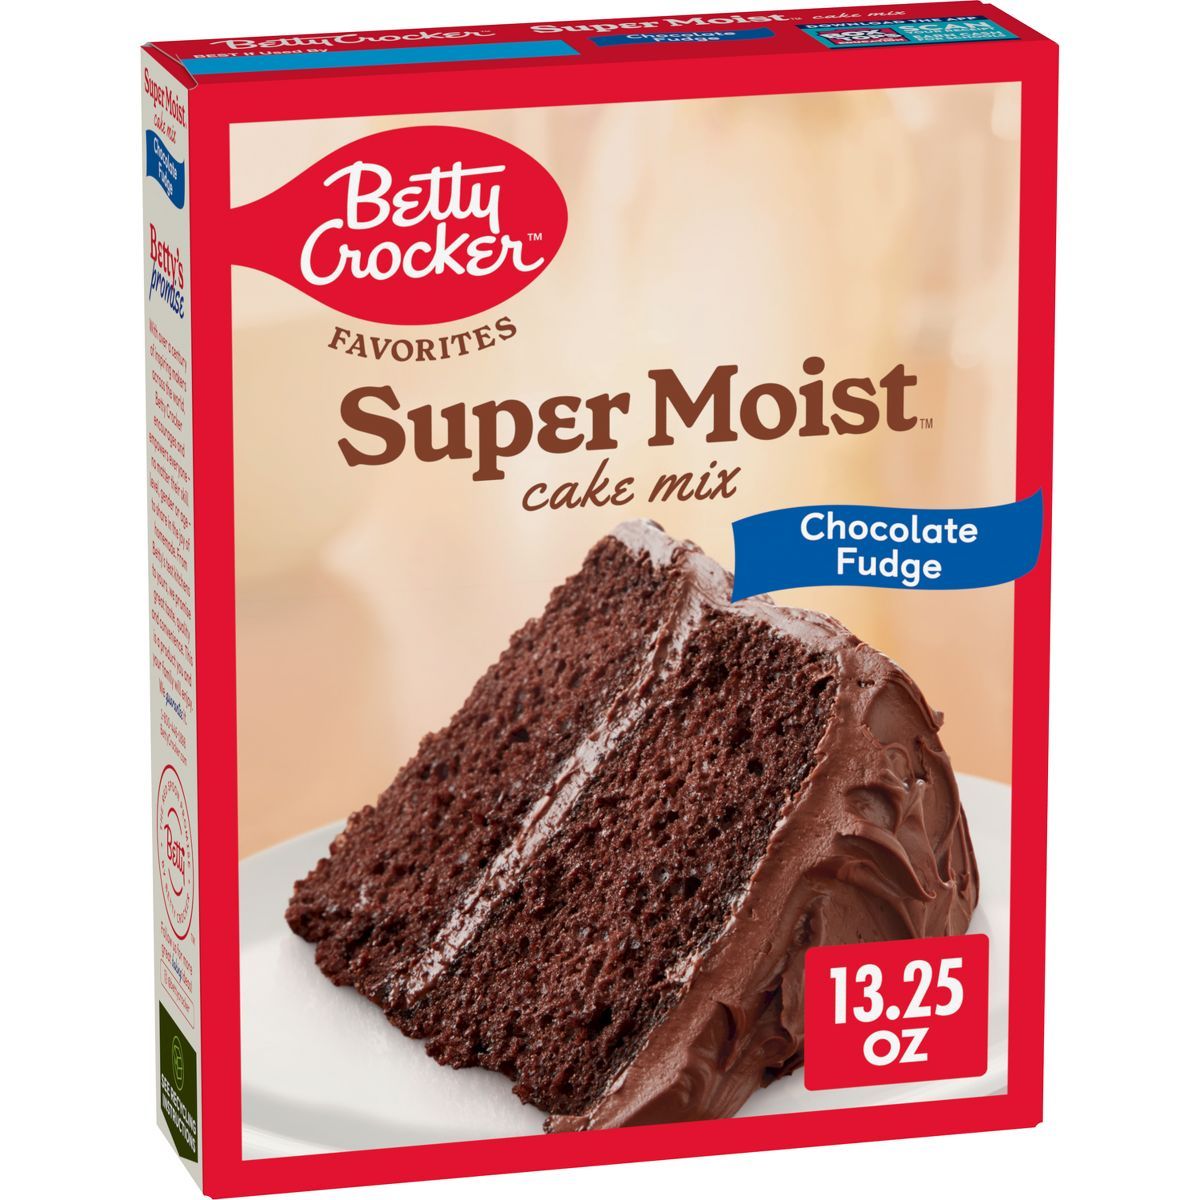 Betty Crocker Chocolate Fudge Super Moist Cake Mix - 13.25oz | Target